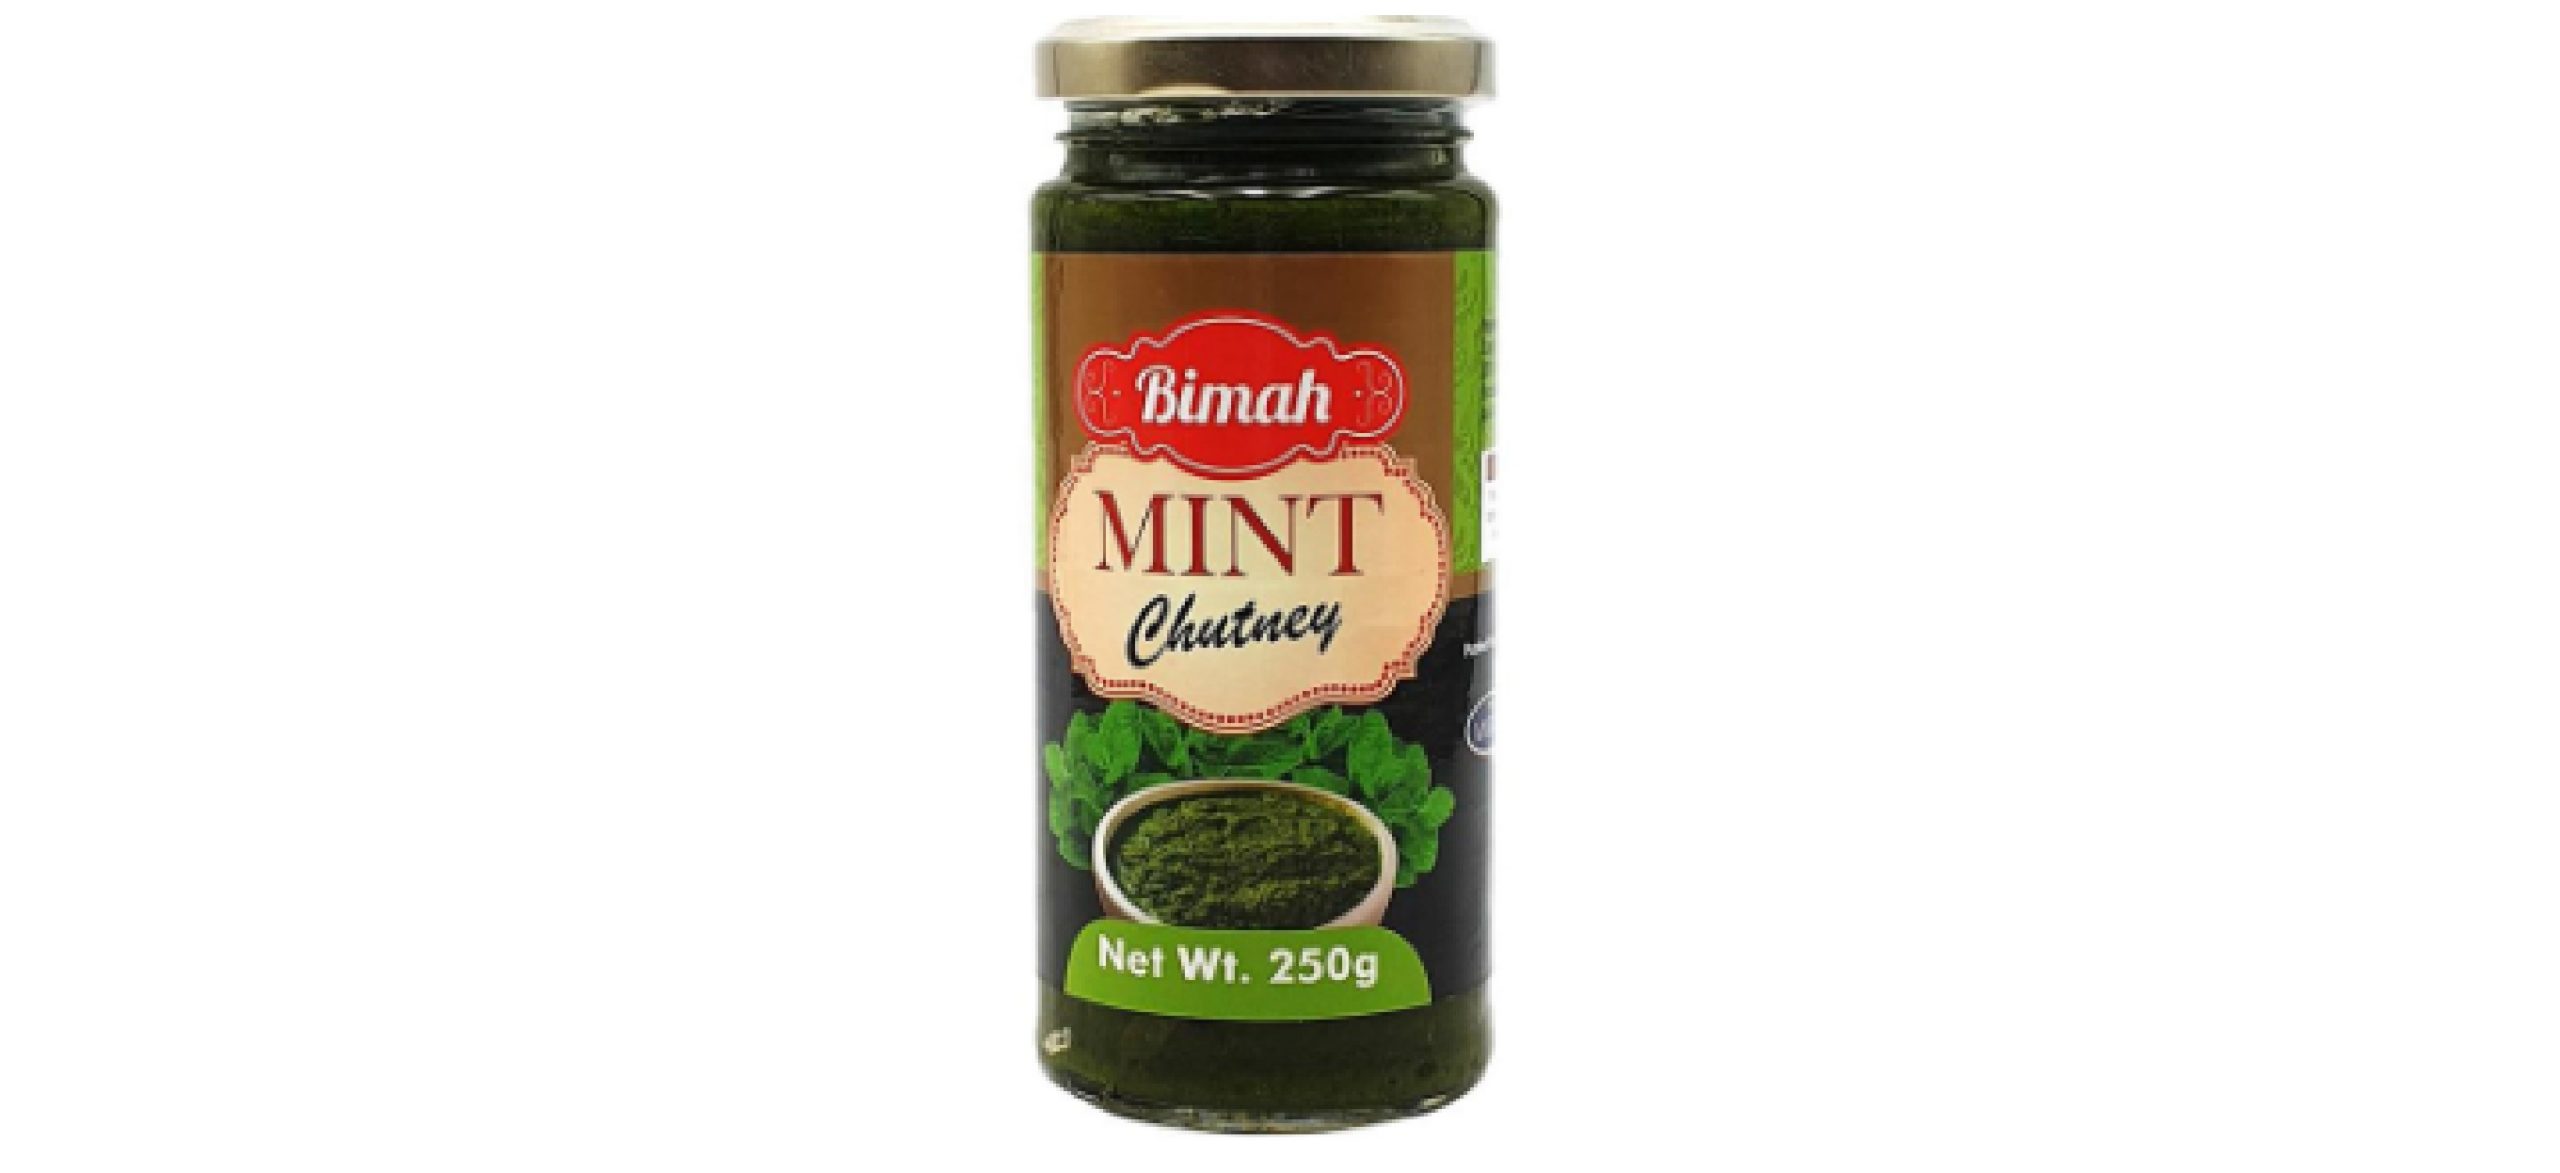 Bimah Mint Chutney -250g